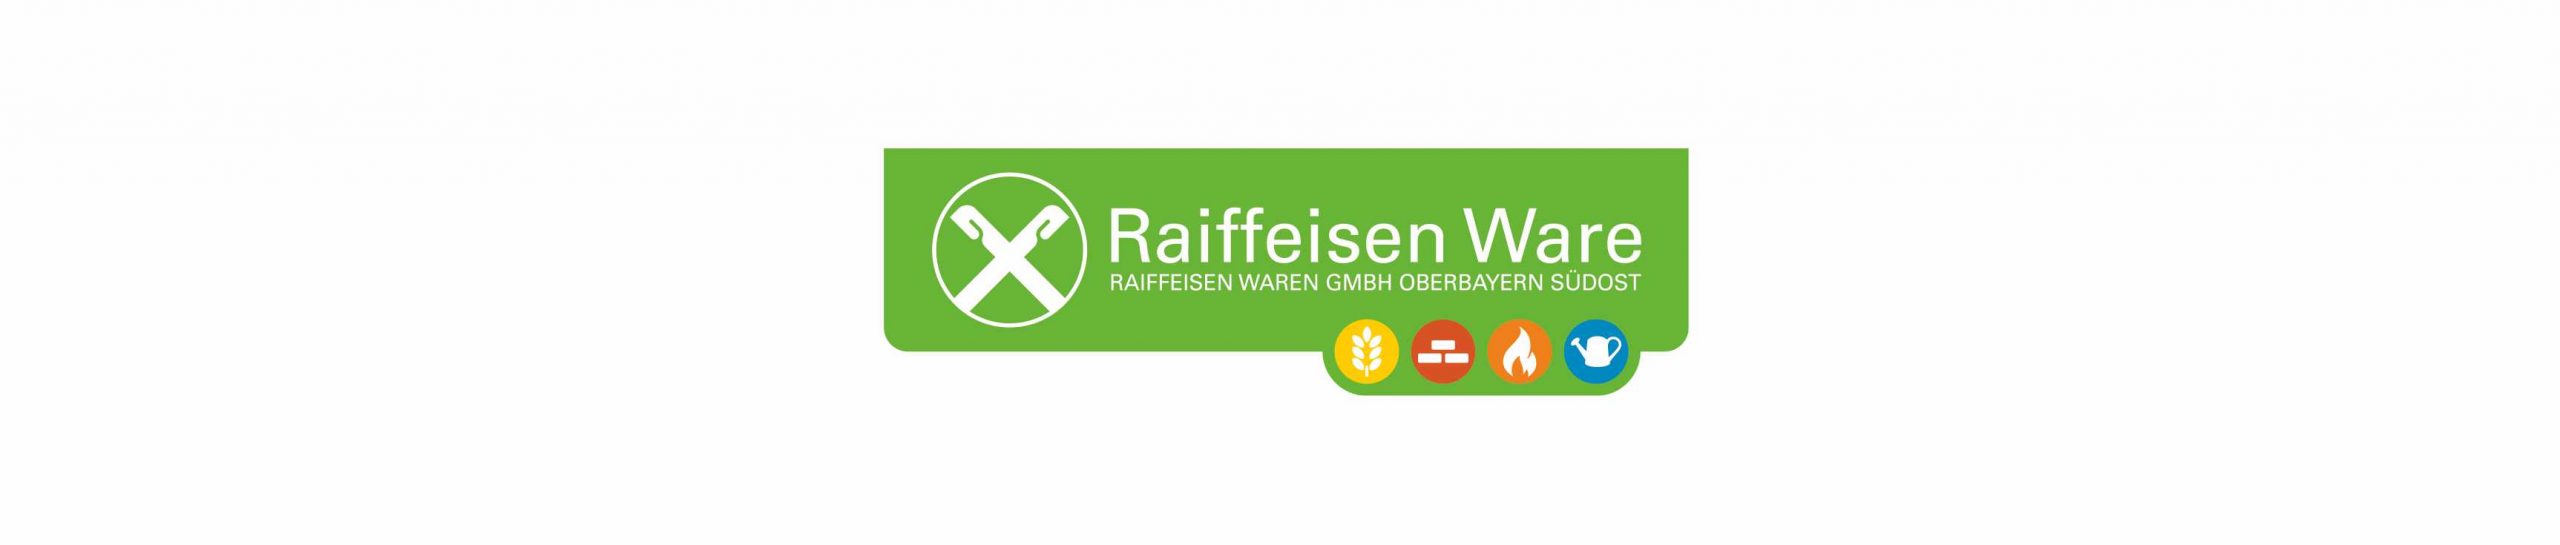 Raiffeisen Waren GmbH Oberbayern Südost Lagerhaus - Fridolfing